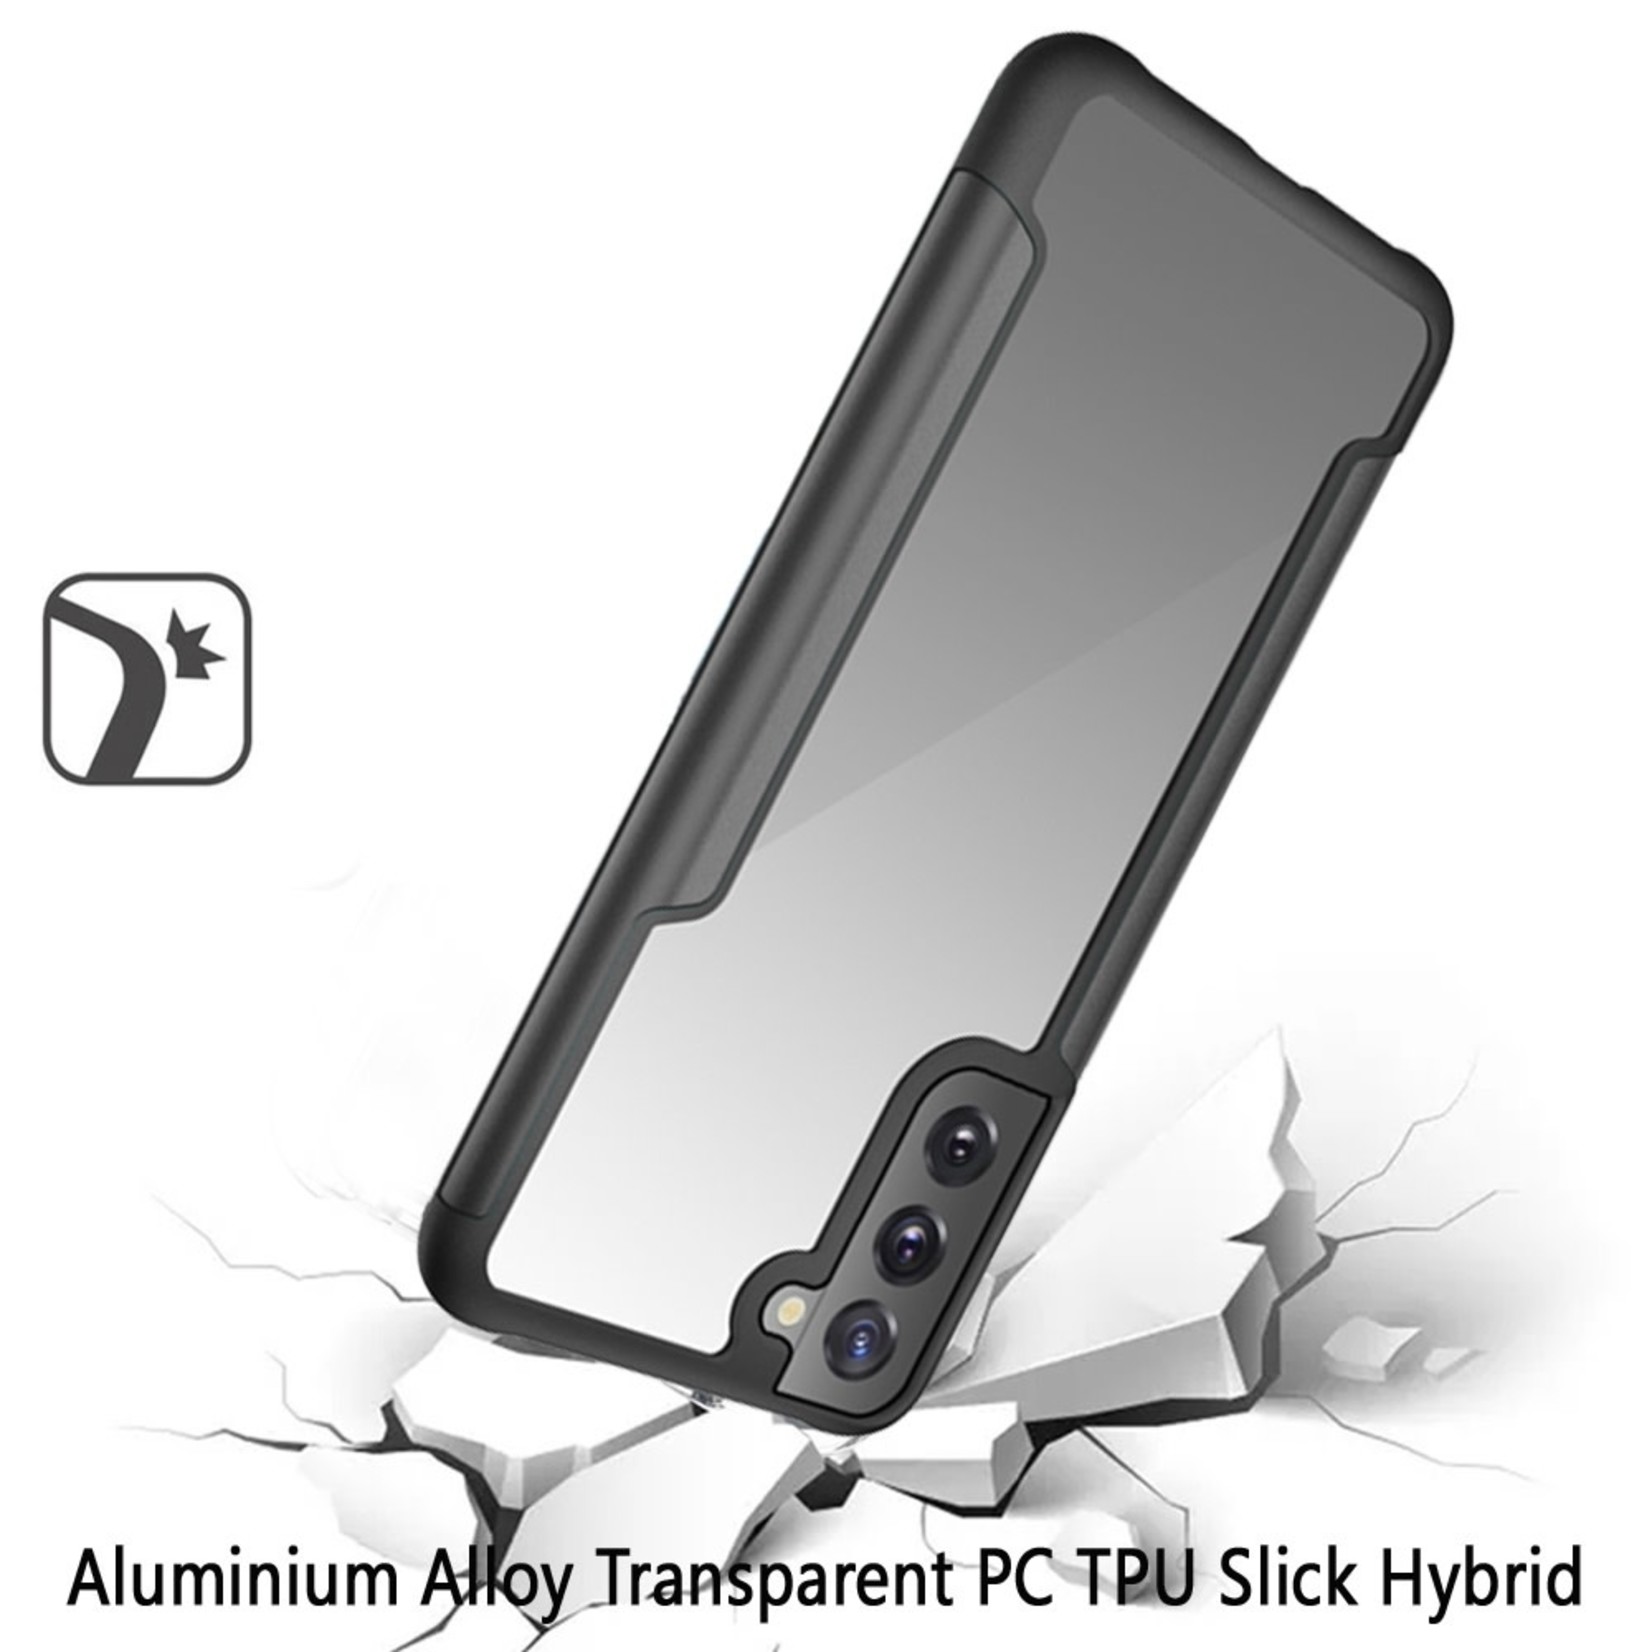 Samsung Aluminium Alloy Transparent PC TPU Slick Hybrid - Black For Samsung Galaxy S22 Ultra